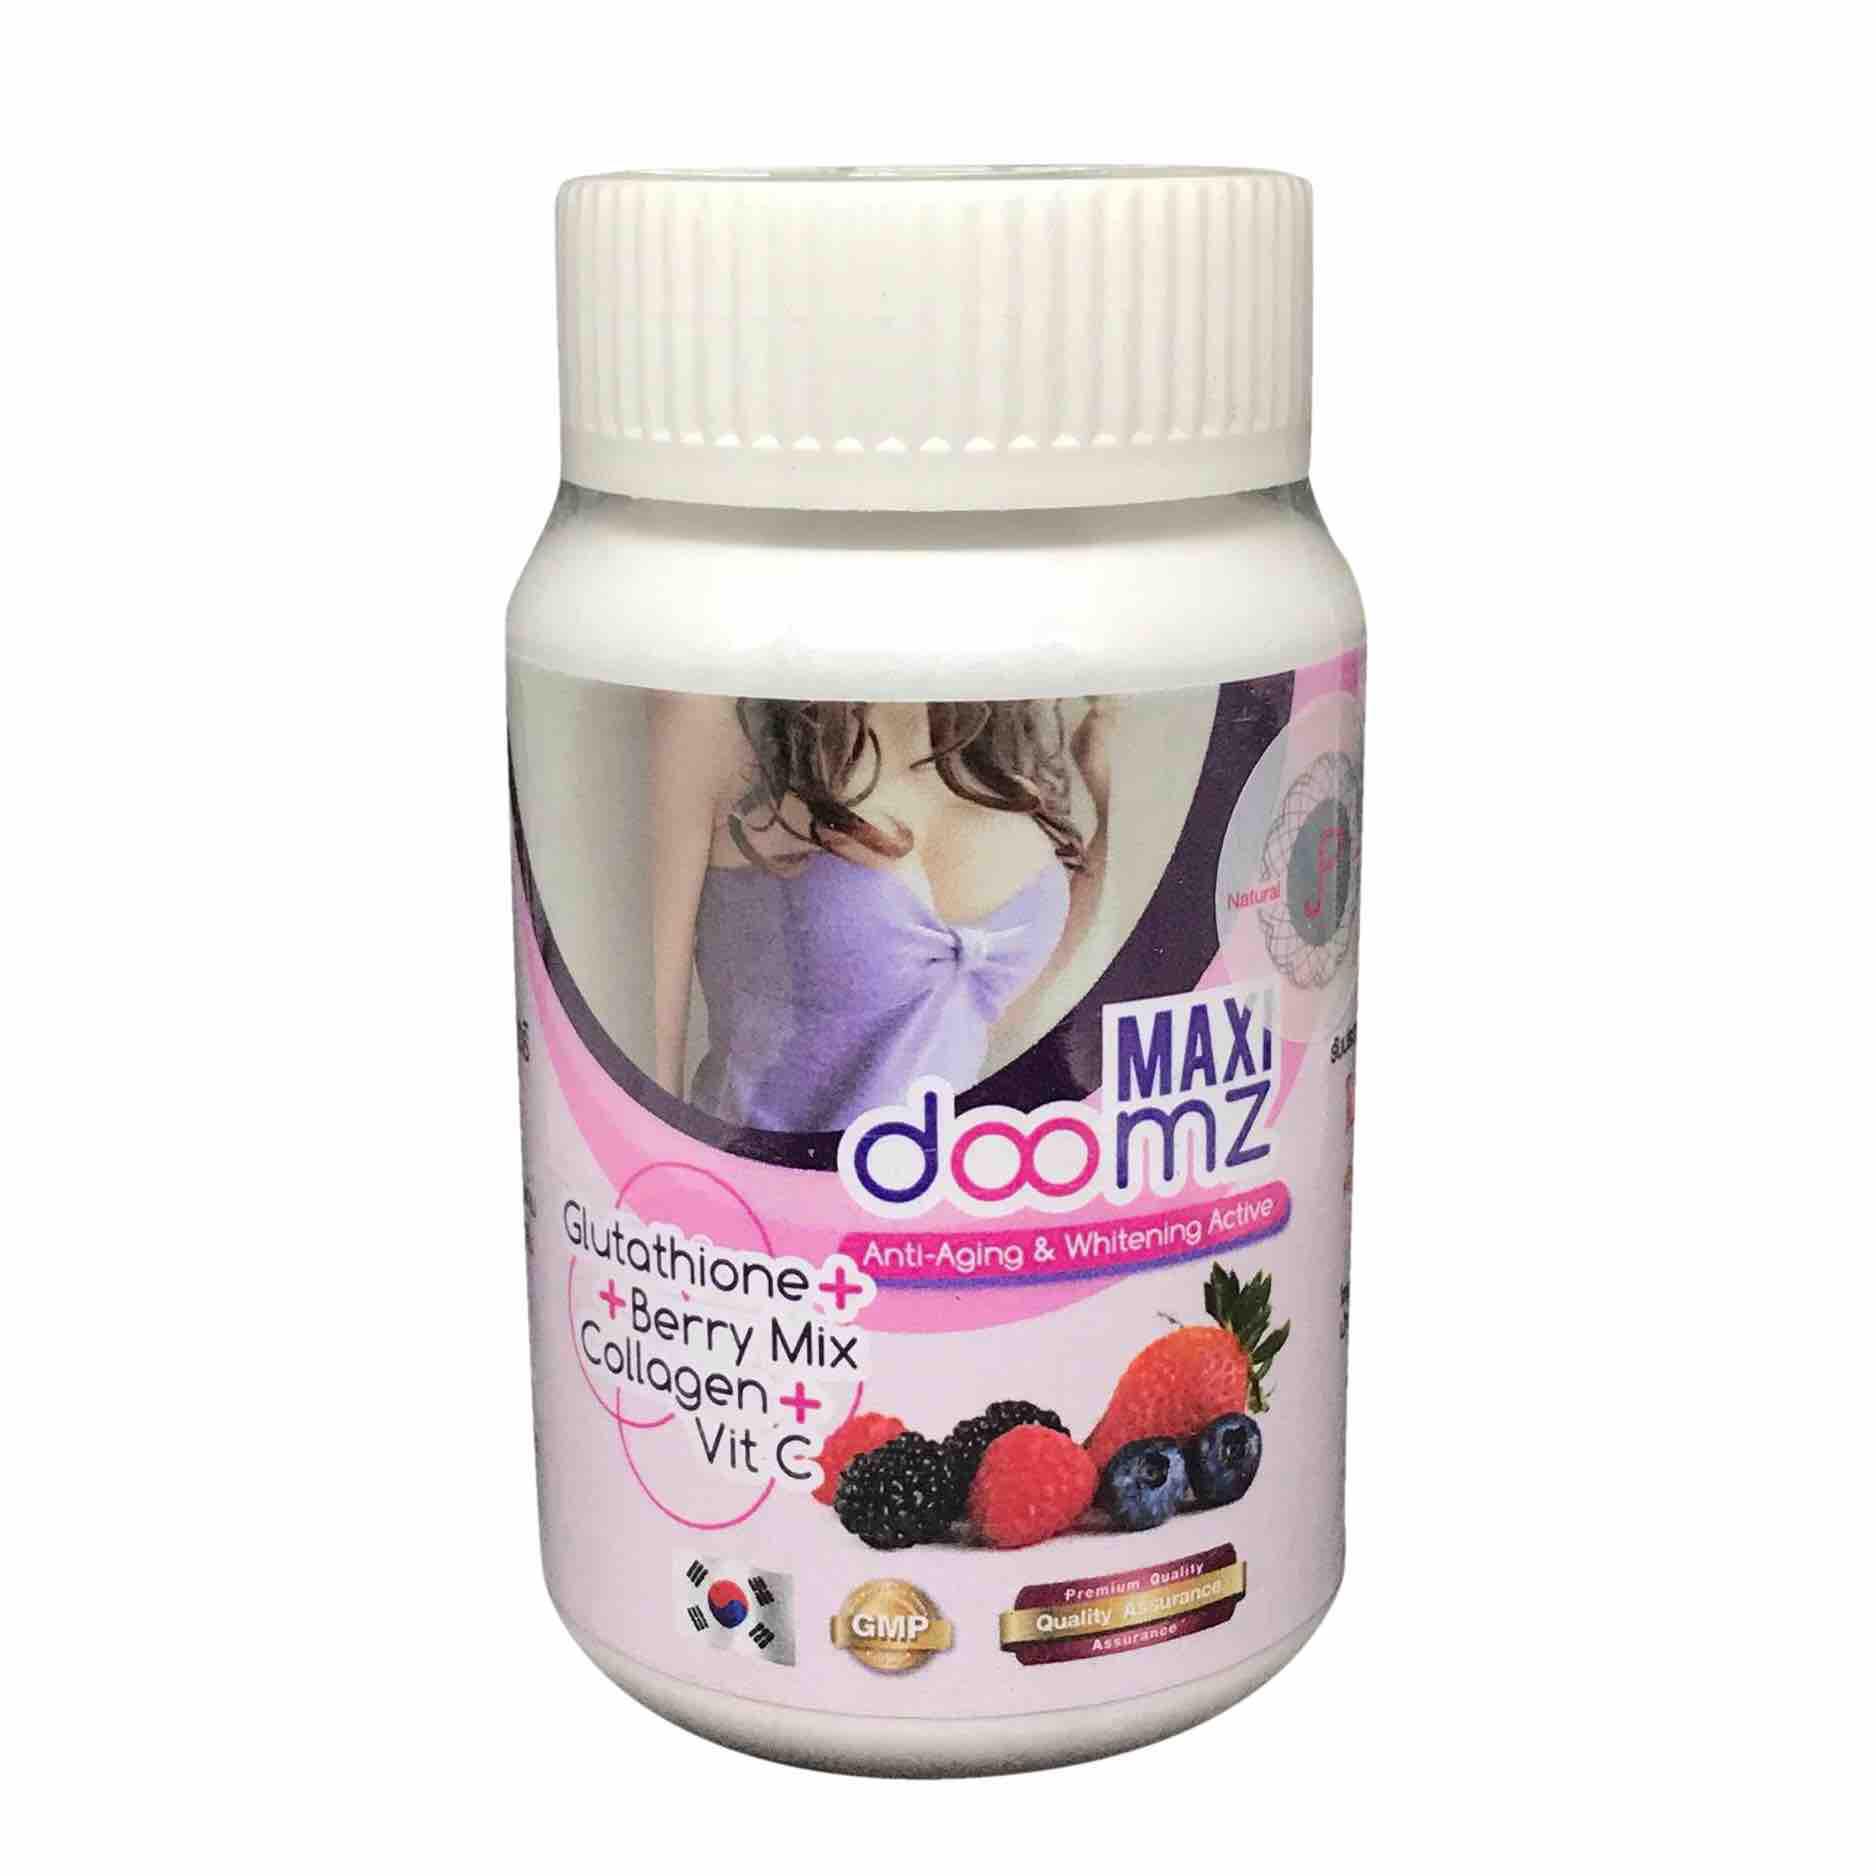 Maxi Doomz Anti-Aging & Whitening Active สำหรับผู้หญิง ผิวขาวอมชมพู 30 เม็ด 1 กระปุก